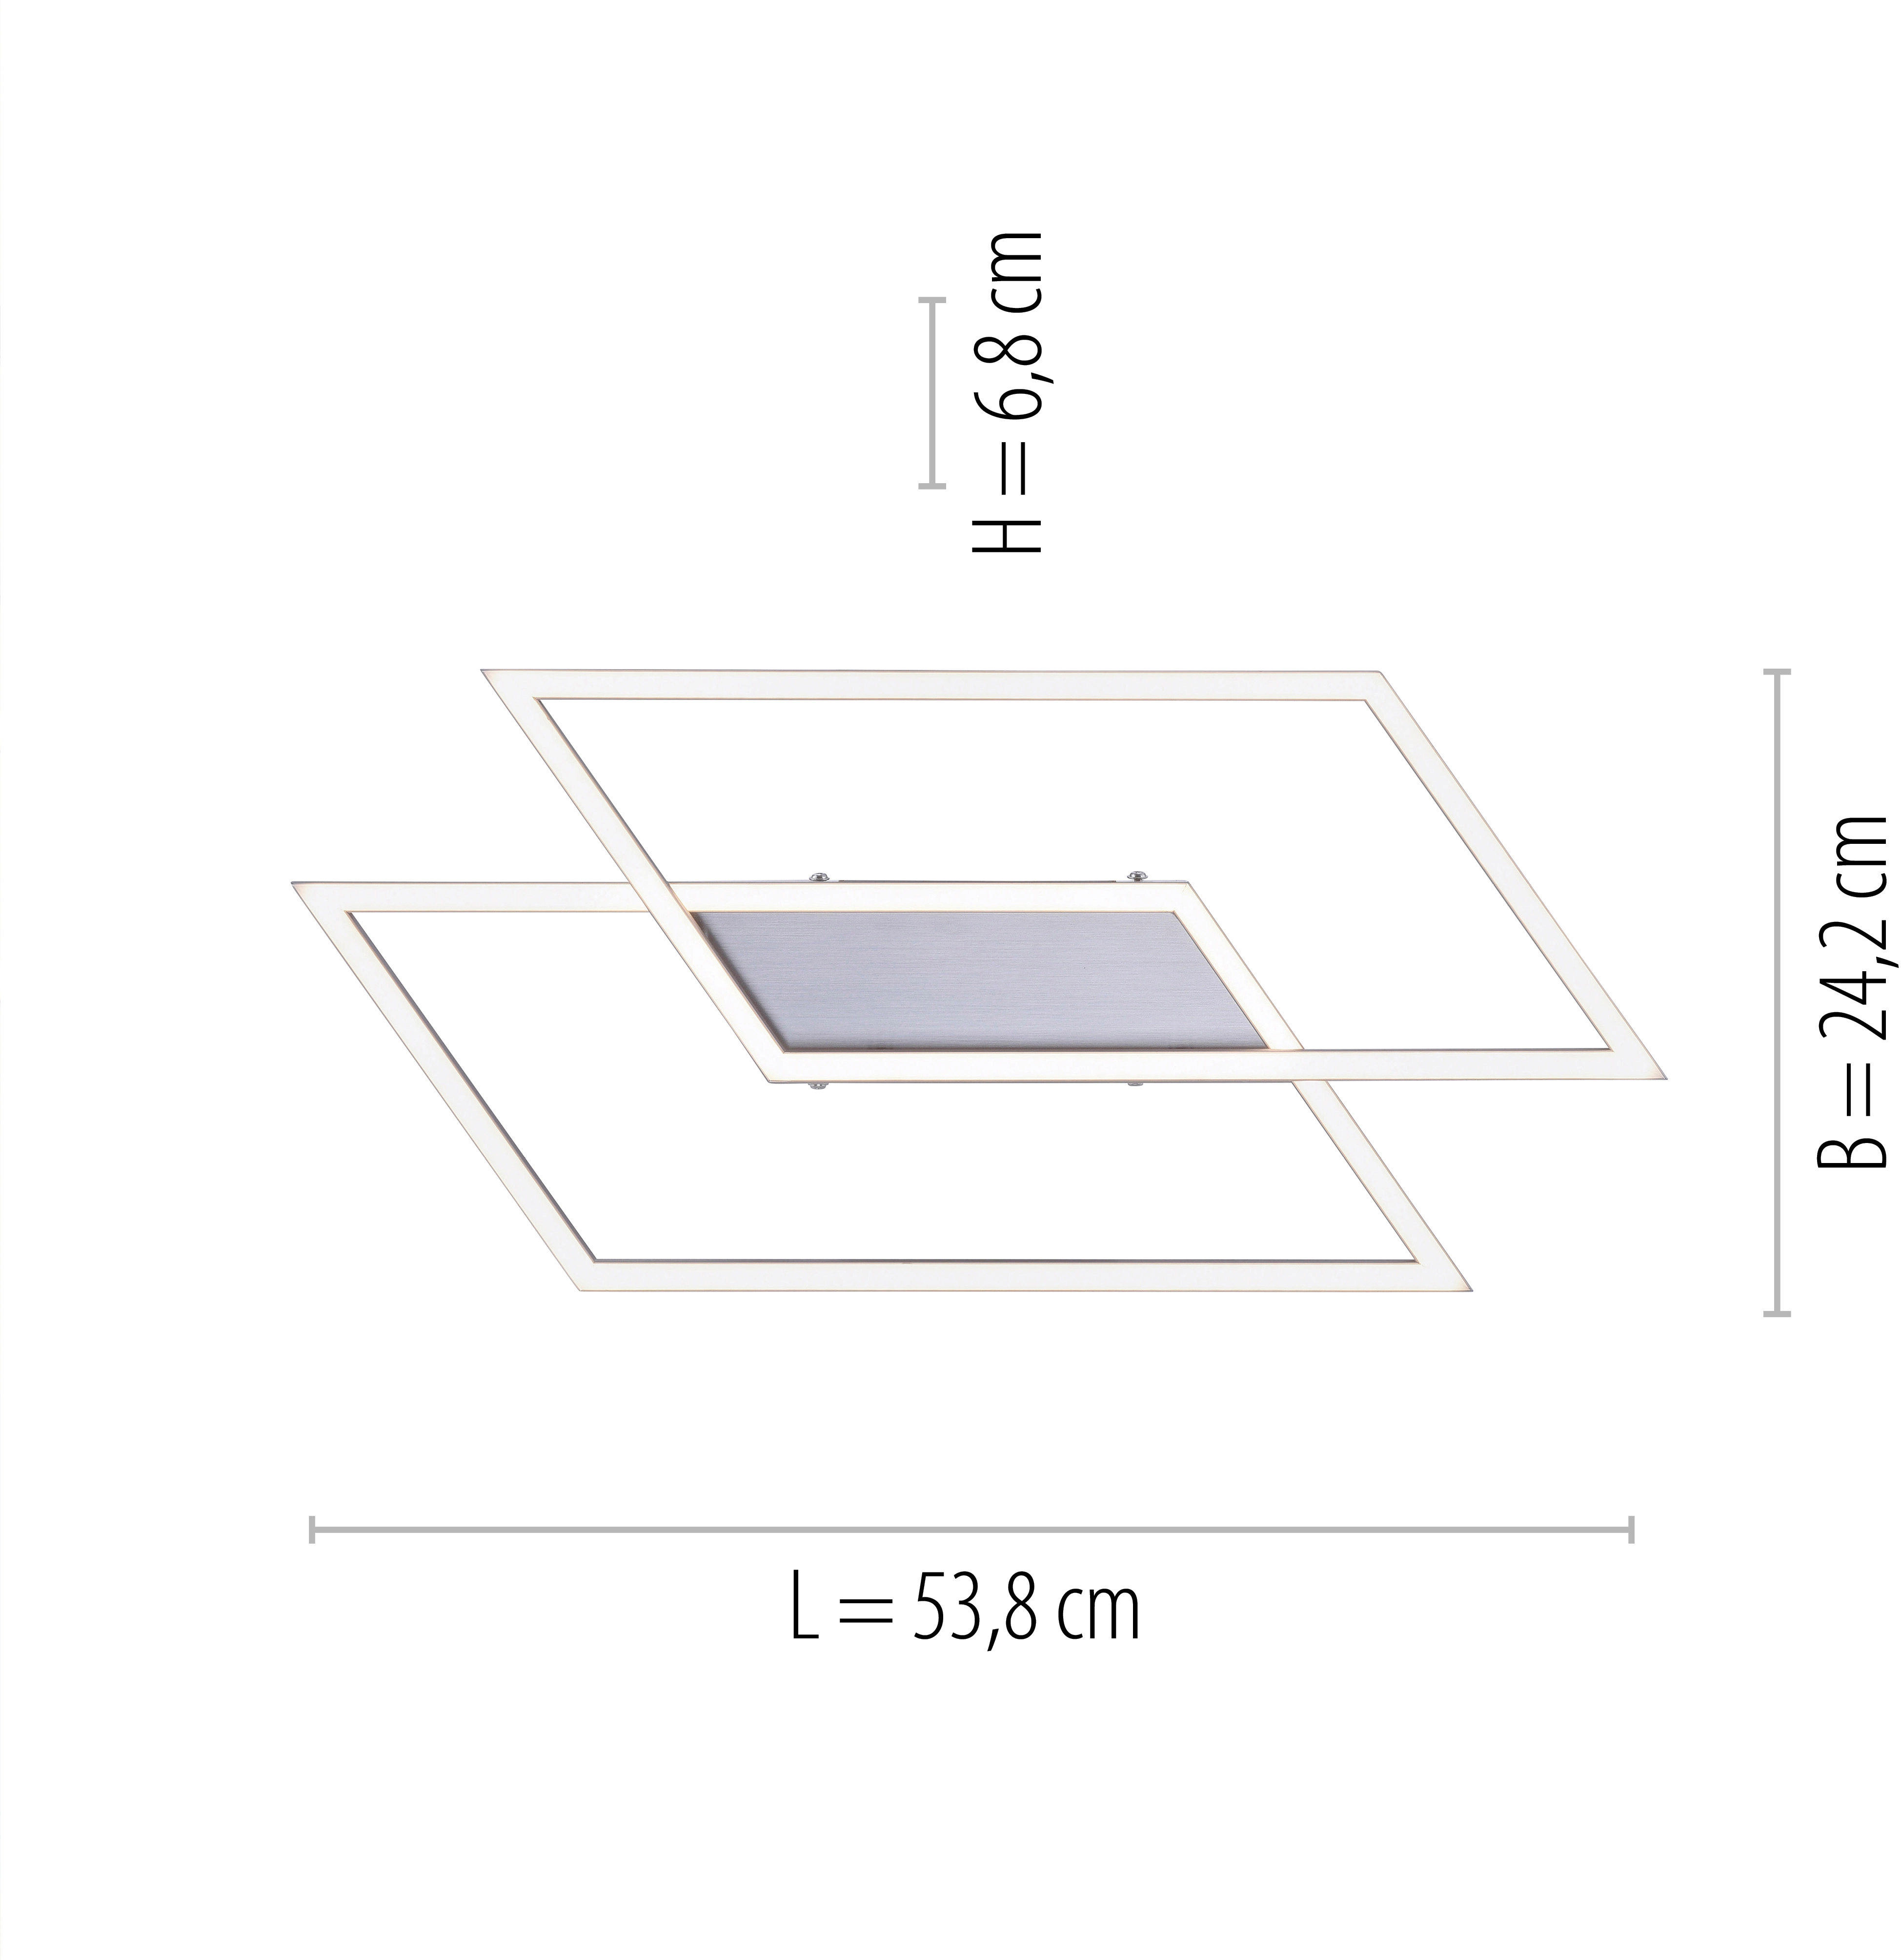 53,8 Inigo Stahl Paul LED-Deckenleuchte 24,2 cm cm Neuhaus 2-flammig x